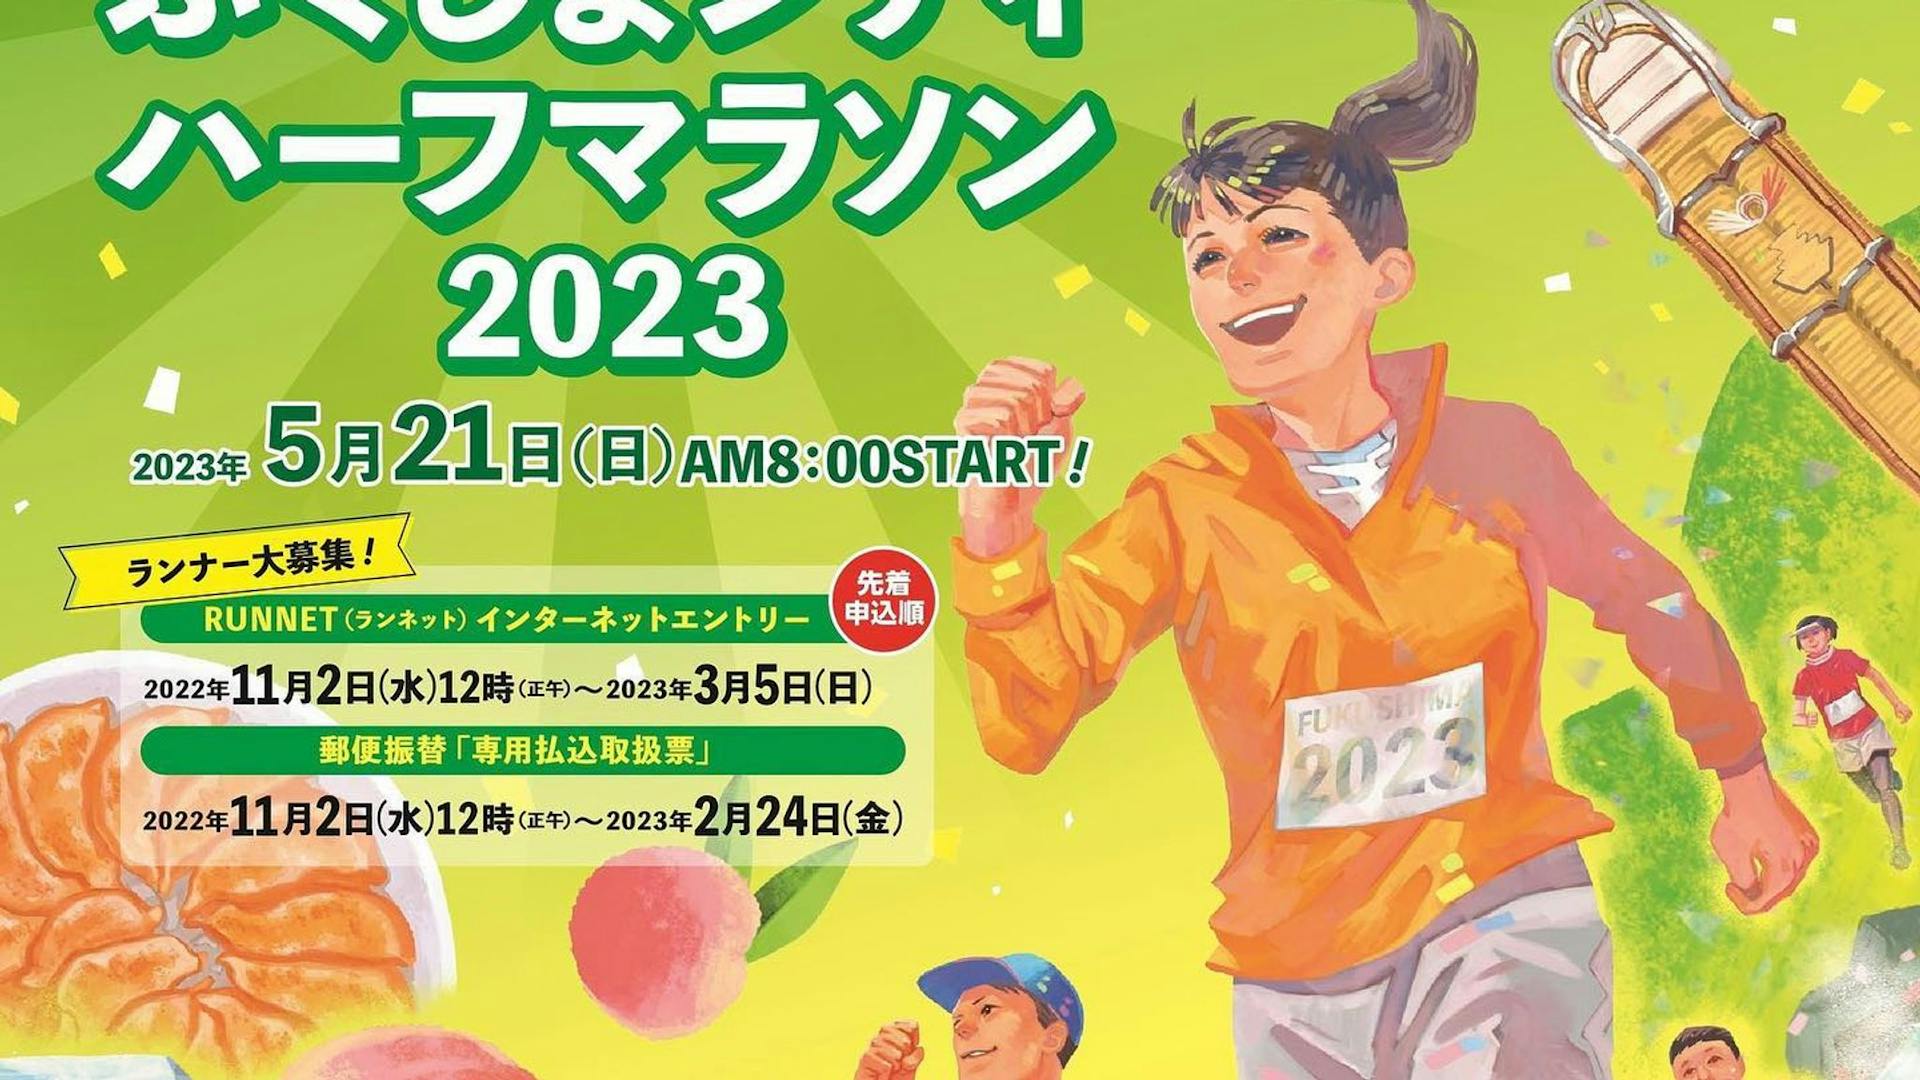 Fukushima City Half Marathon